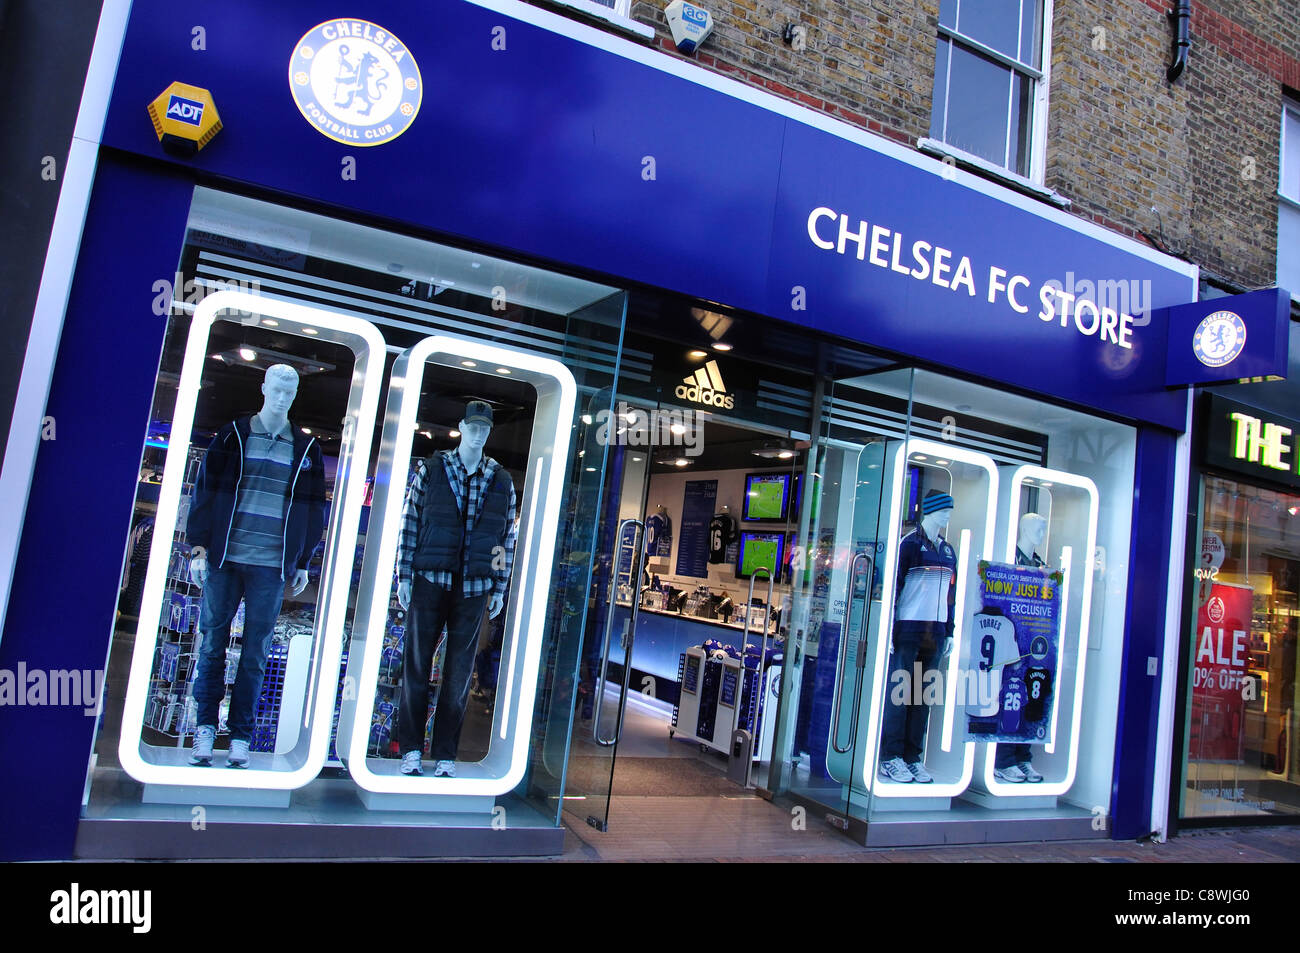 Chelsea FC Store, Kingston upon Thames, Royal Borough di Kingston upon Thames, Greater London, England, Regno Unito Foto Stock